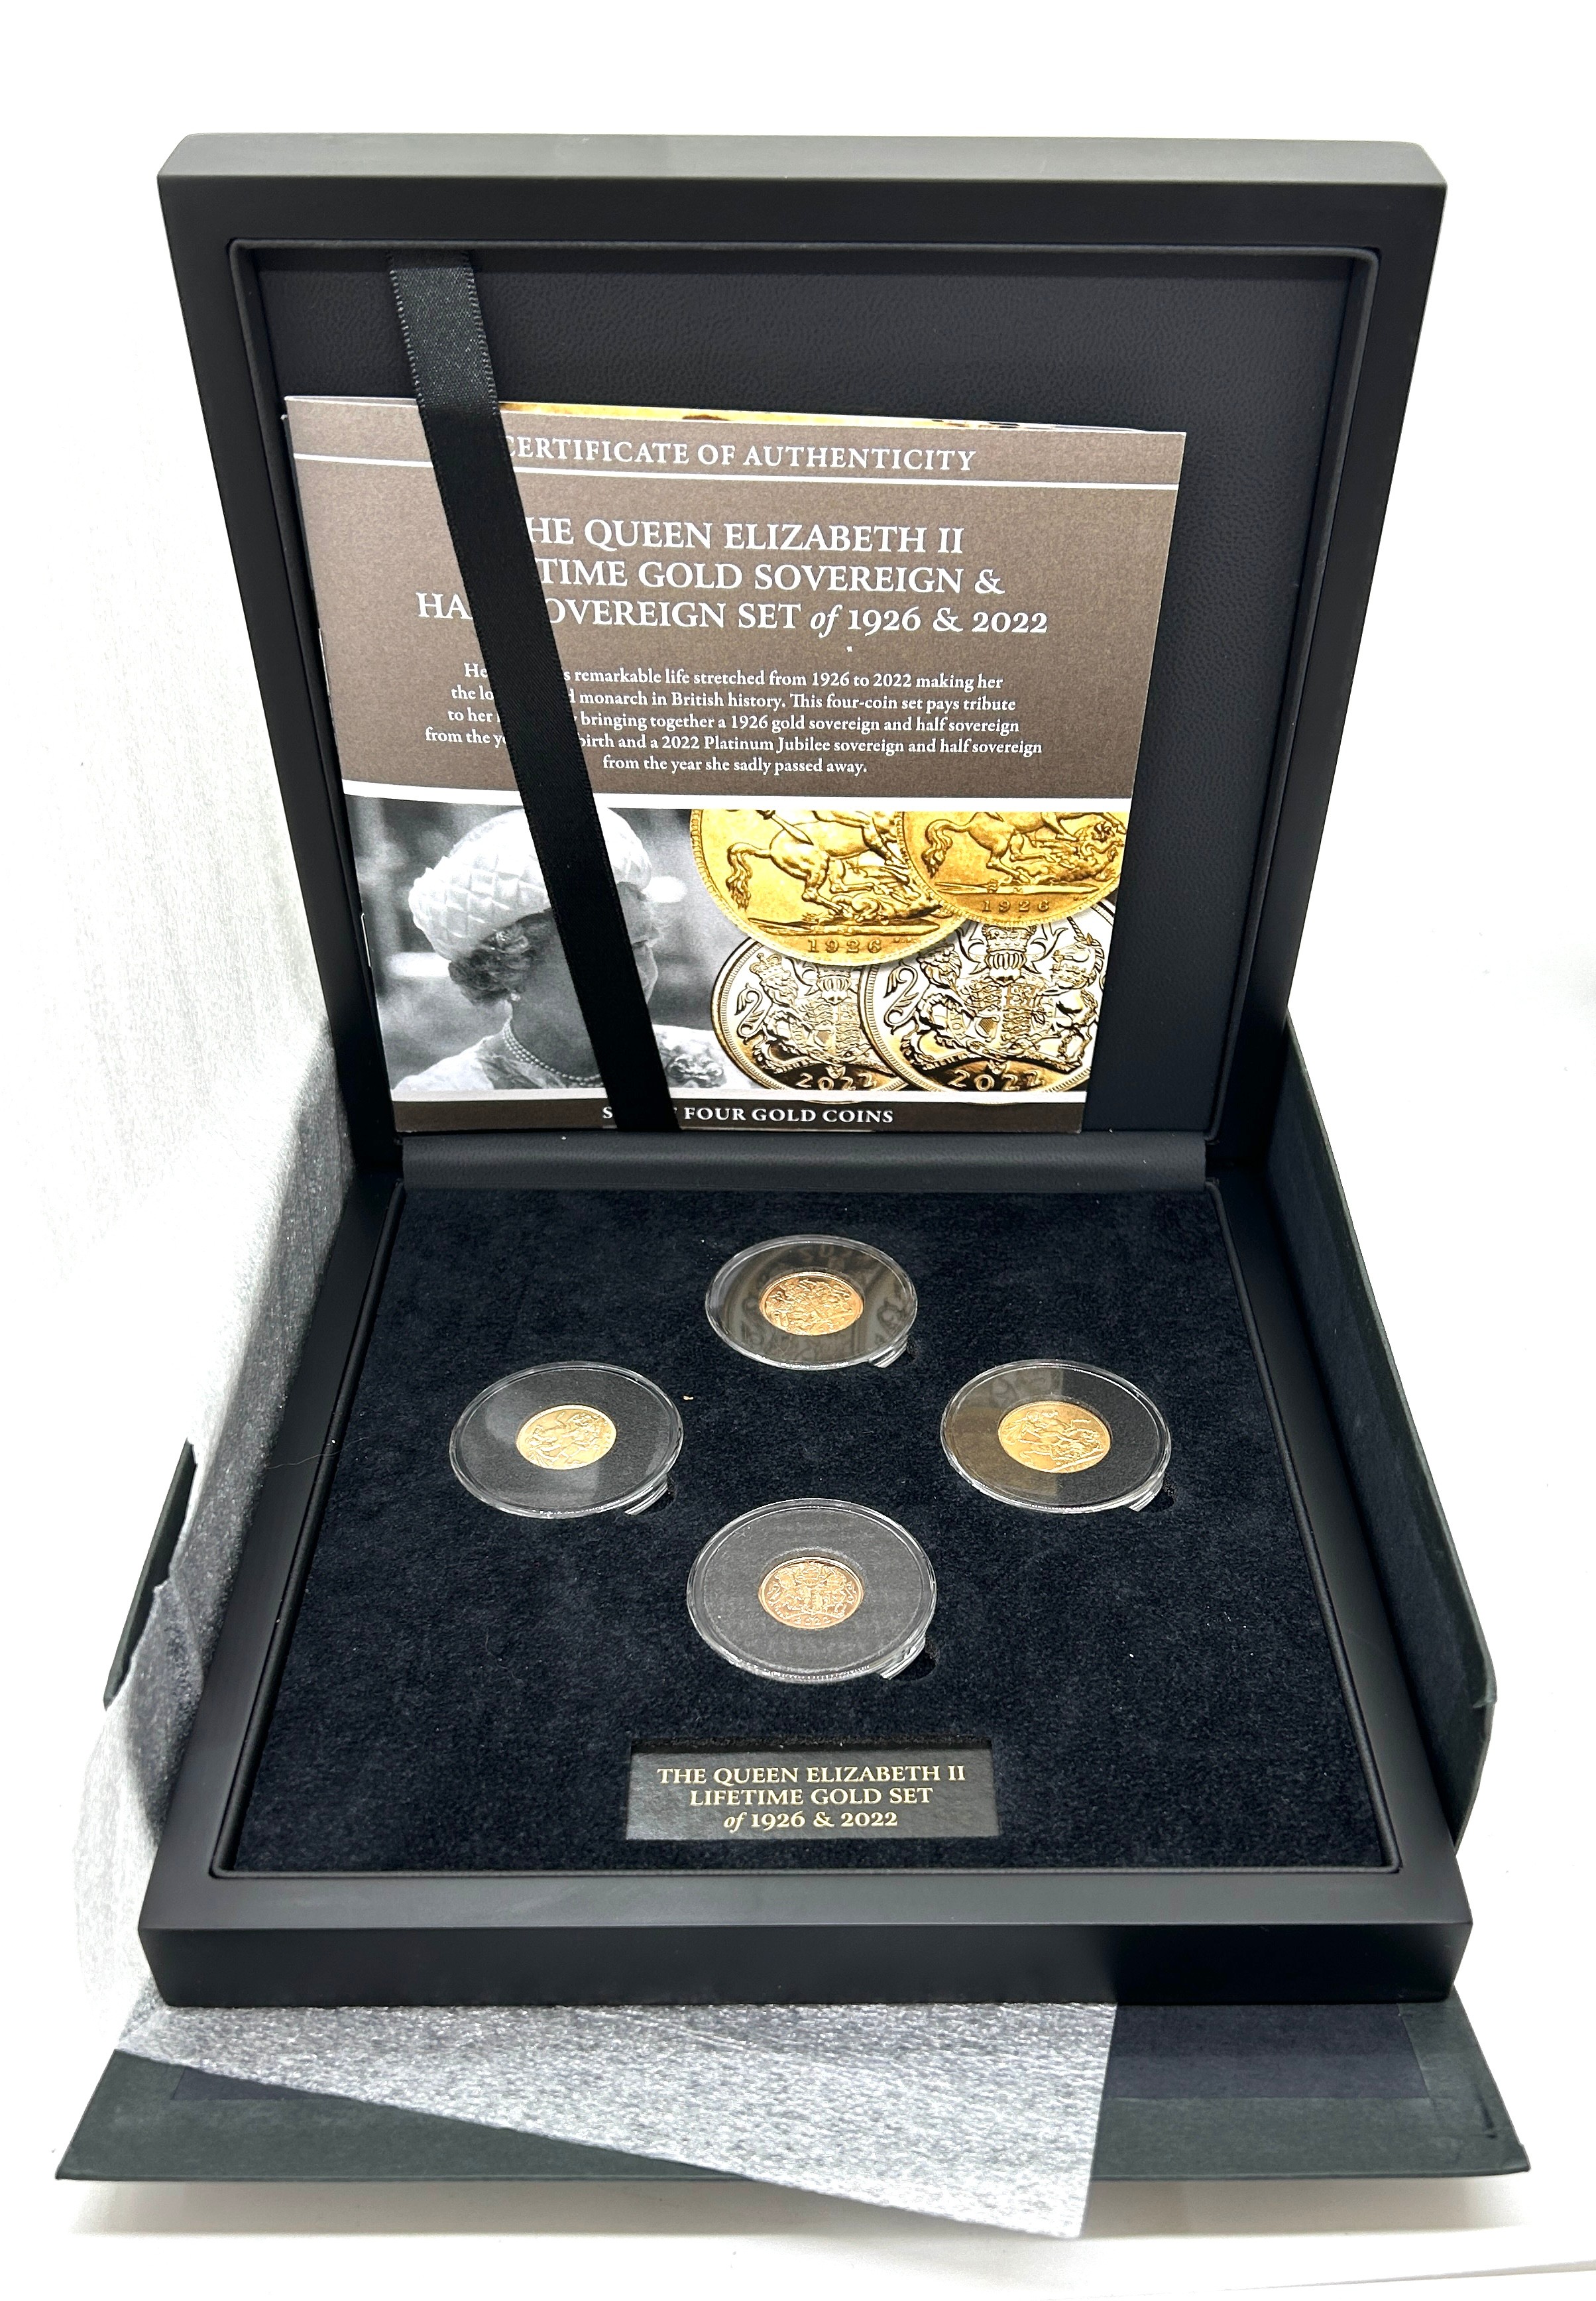 Cased limited edition Hattons Queen Elizabeth II platinum jubilee lifetime 24 carat gold half